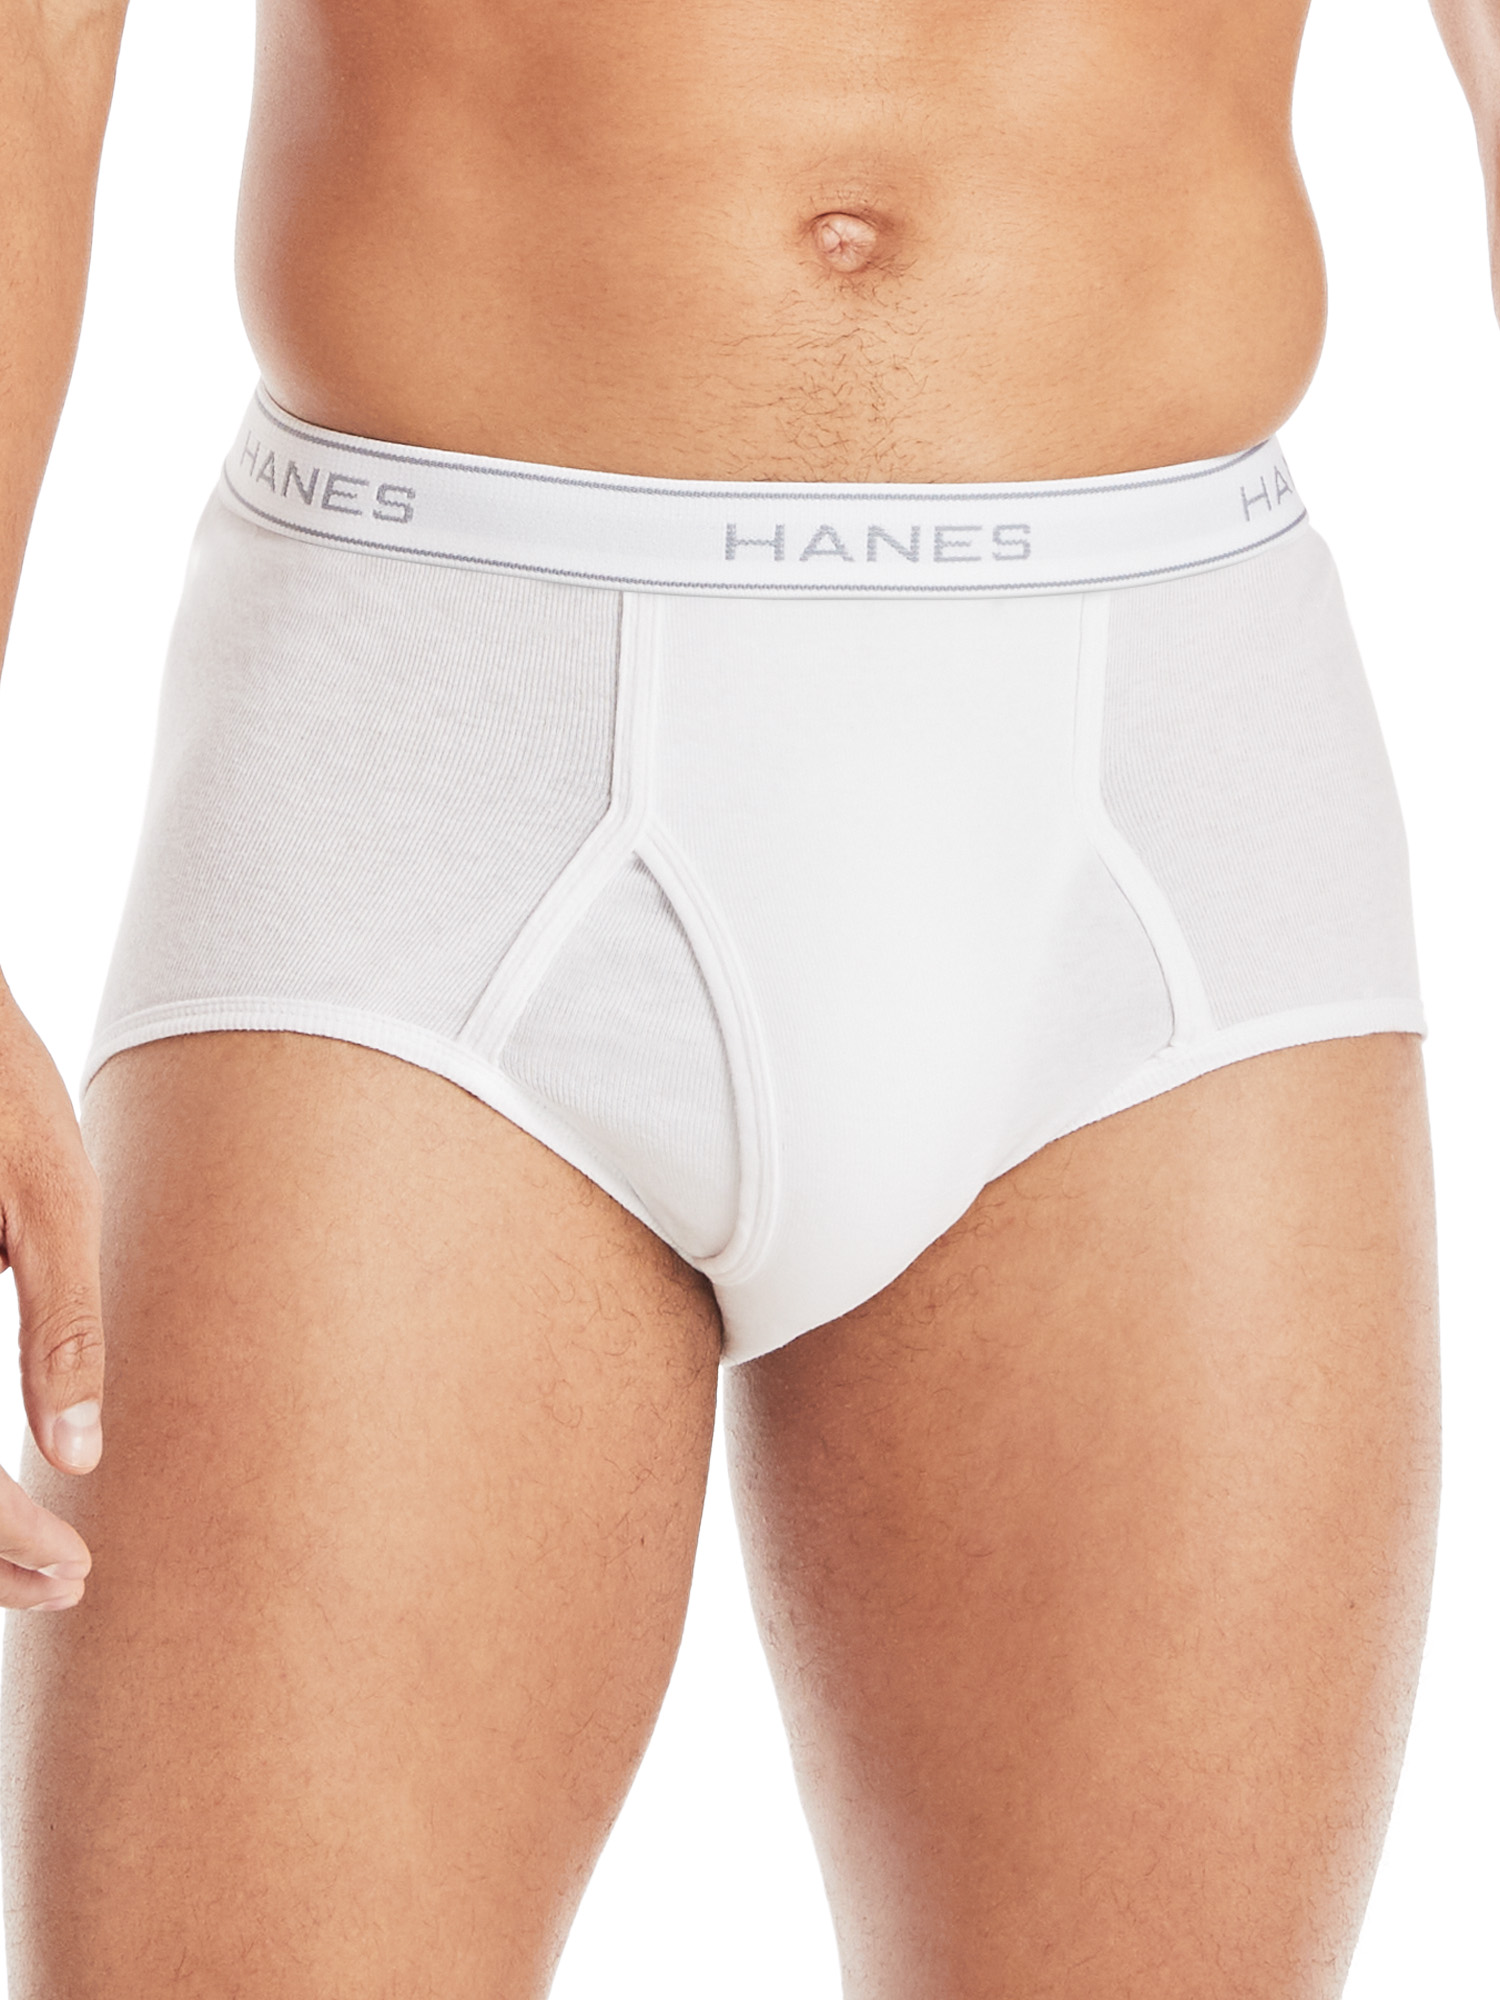 Hanes Men's Value Pack White Briefs, 6 Pack - image 3 of 9